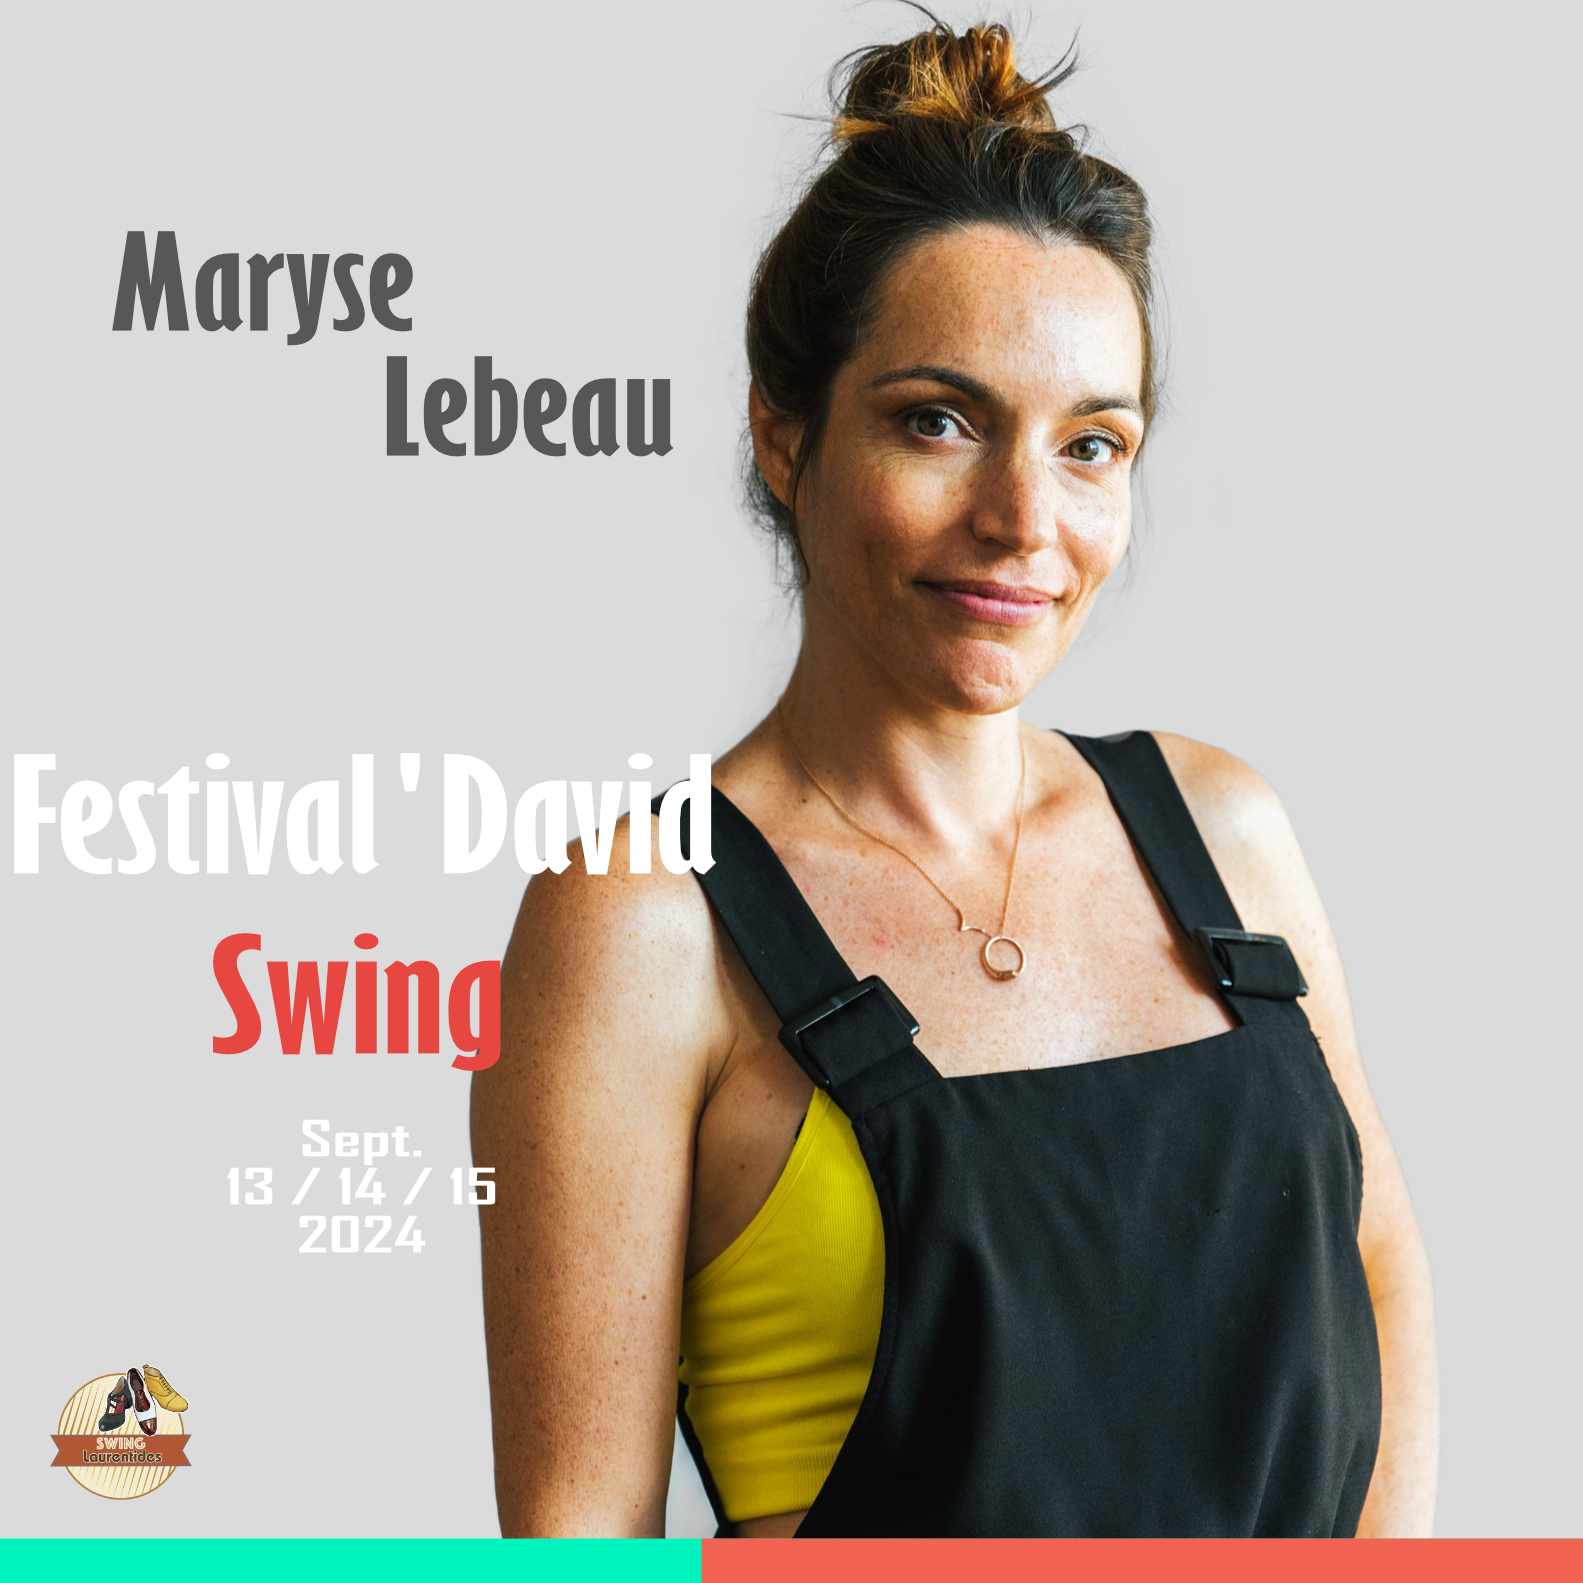 Maryse Lebeau _ Festival'David Swing